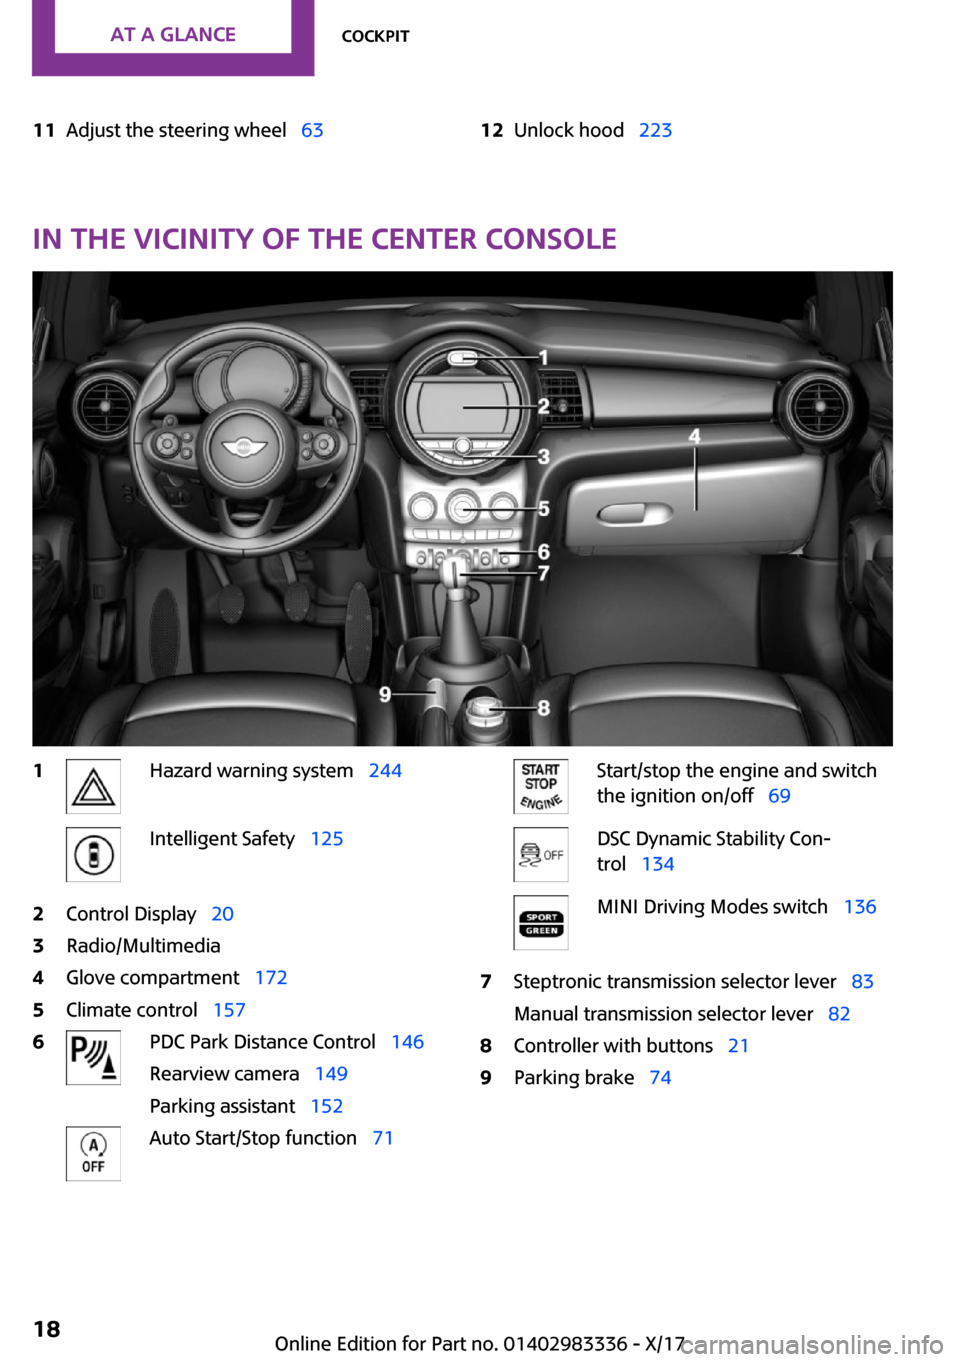 MINI Hardtop 4 Door 2018 User Guide �1�1�A�d�j�u�s�t� �t�h�e� �s�t�e�e�r�i�n�g� �w�h�e�e�lps�6�3�1�2�U�n�l�o�c�k� �h�o�o�dps�2�2�3
�I�n��t�h�e��v�i�c�i�n�i�t�y��o�f��t�h�e��c�e�n�t�e�r��c�o�n�s�o�l�e
�1�H�a�z�a�r�d� �w�a�r�n�i